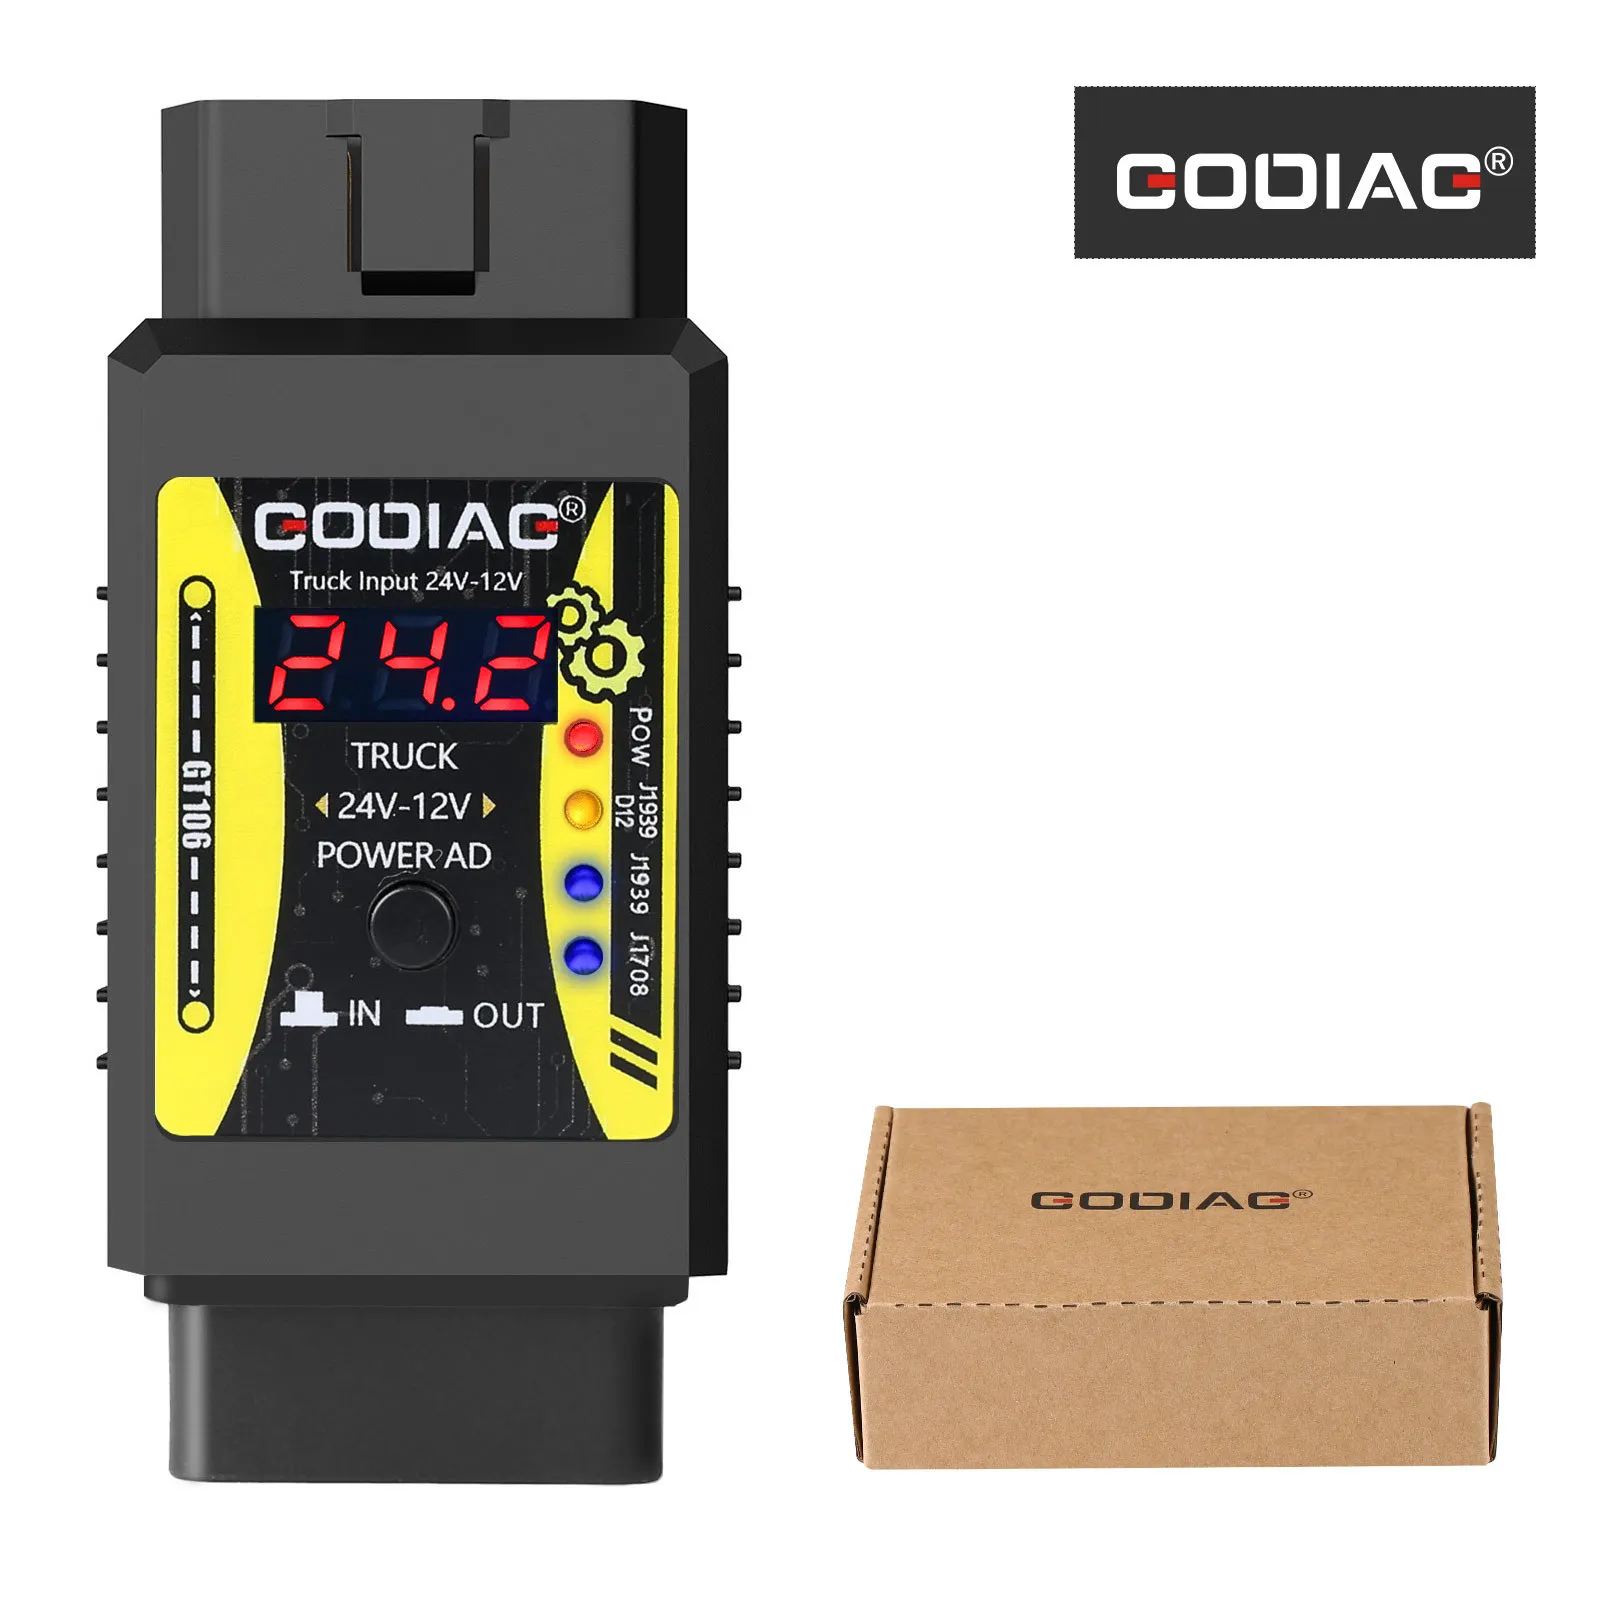 

GODIAG GT106 24V to 12V Heavy Duty Truck Universal Converter Adapter for X431 easydiag/Golo/ThinkCar/Diagun/Thinkcar2/ Thinkdiag